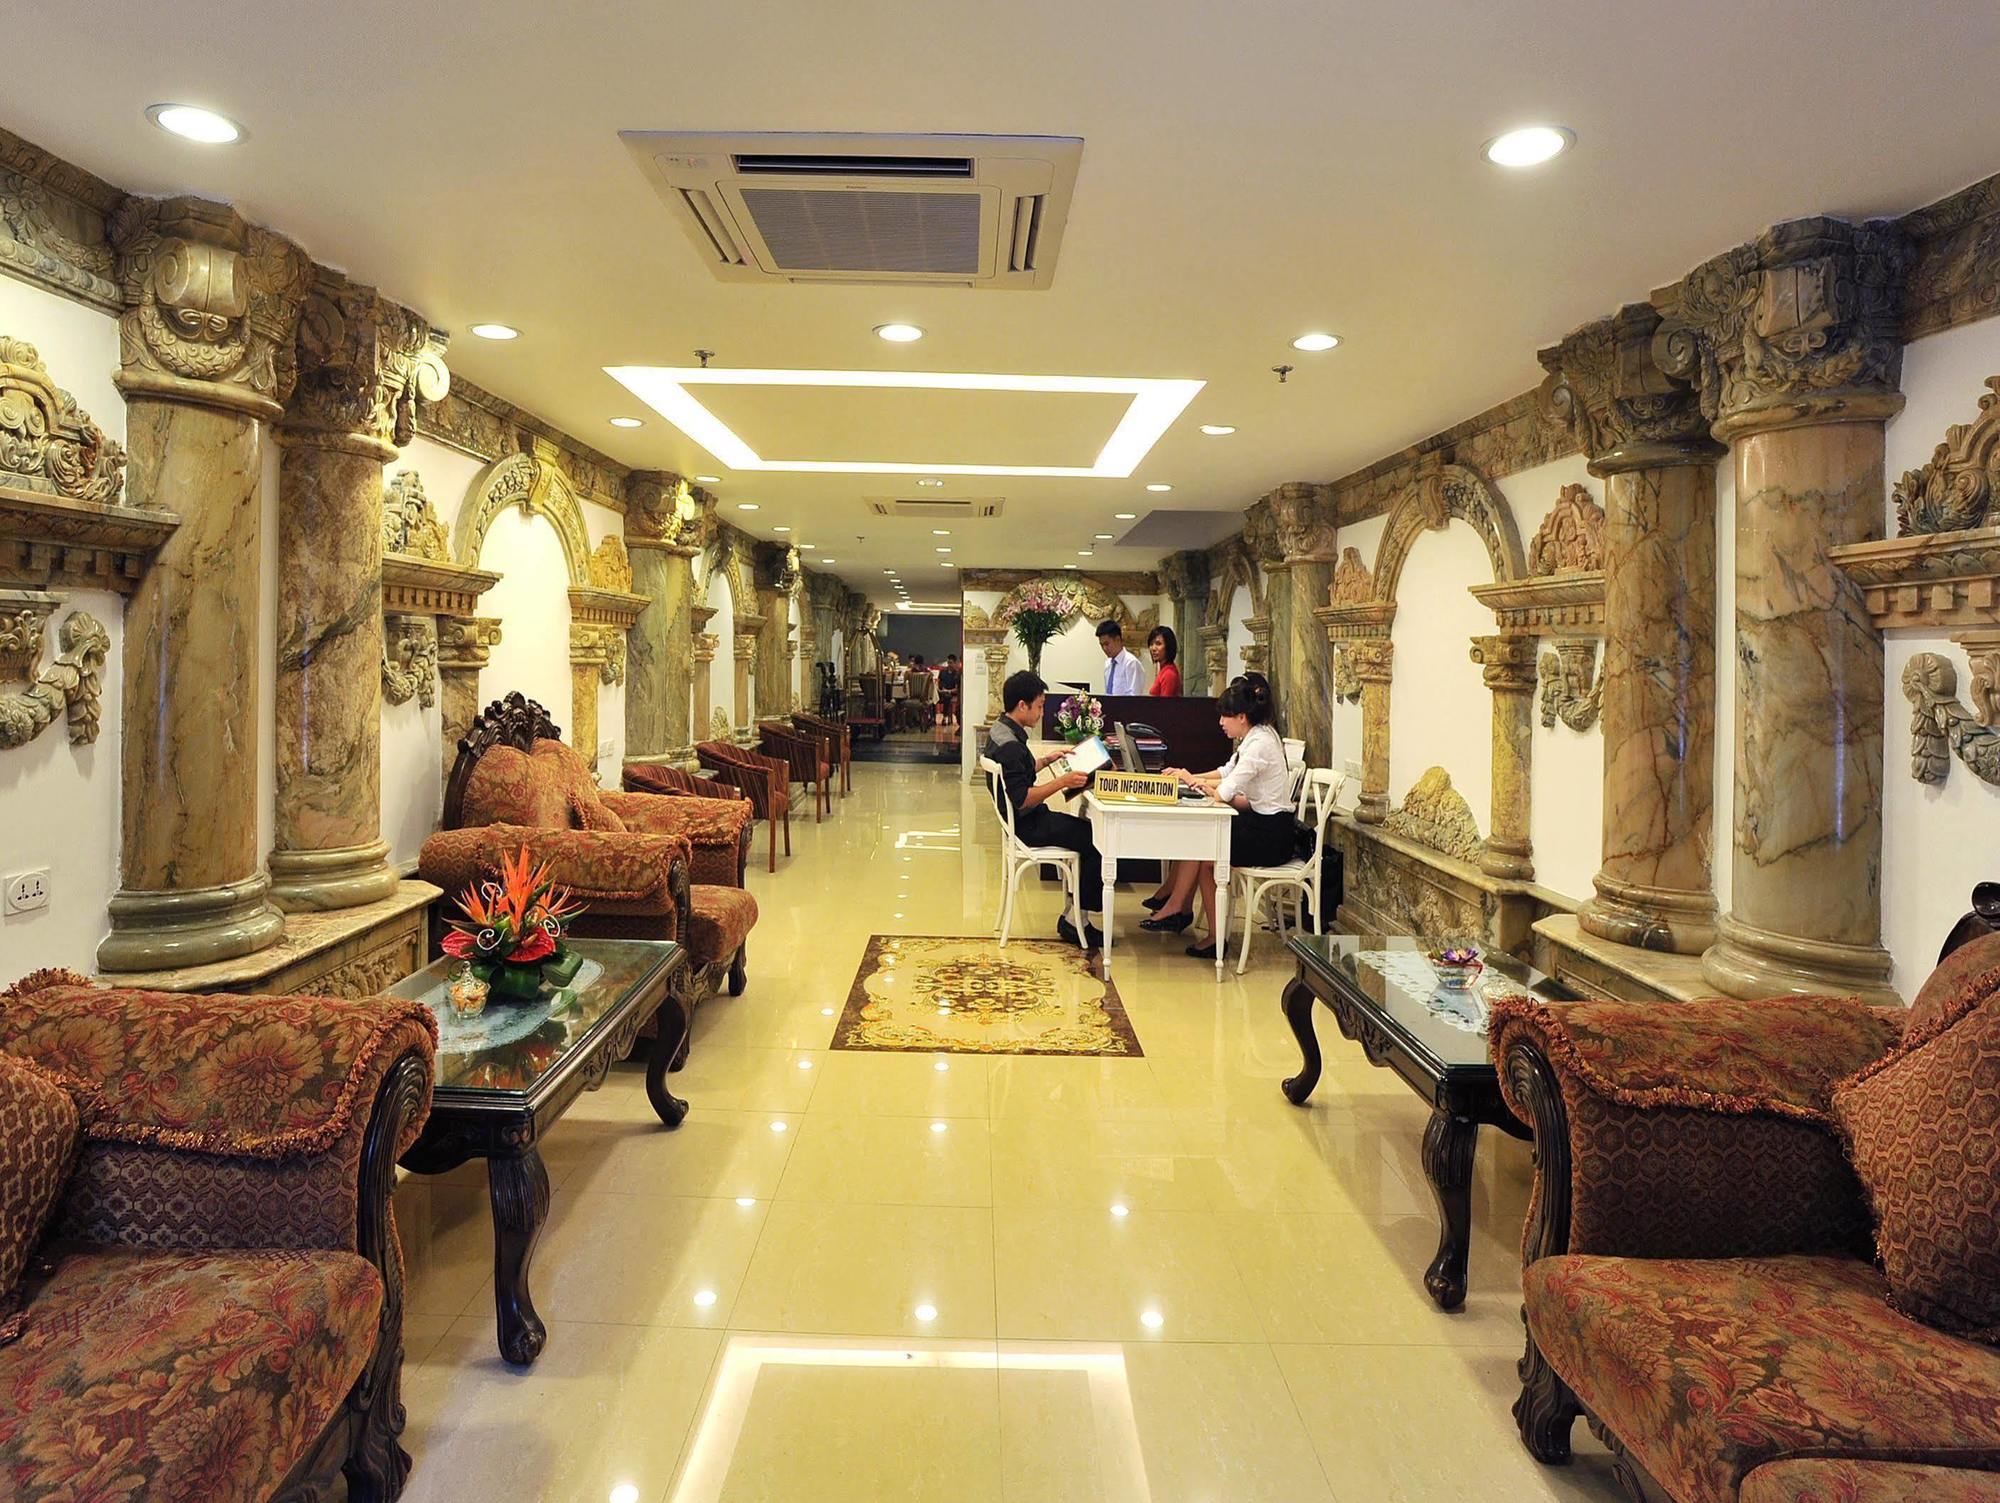 Hanoi Legacy Hotel - Hang Bac Екстер'єр фото